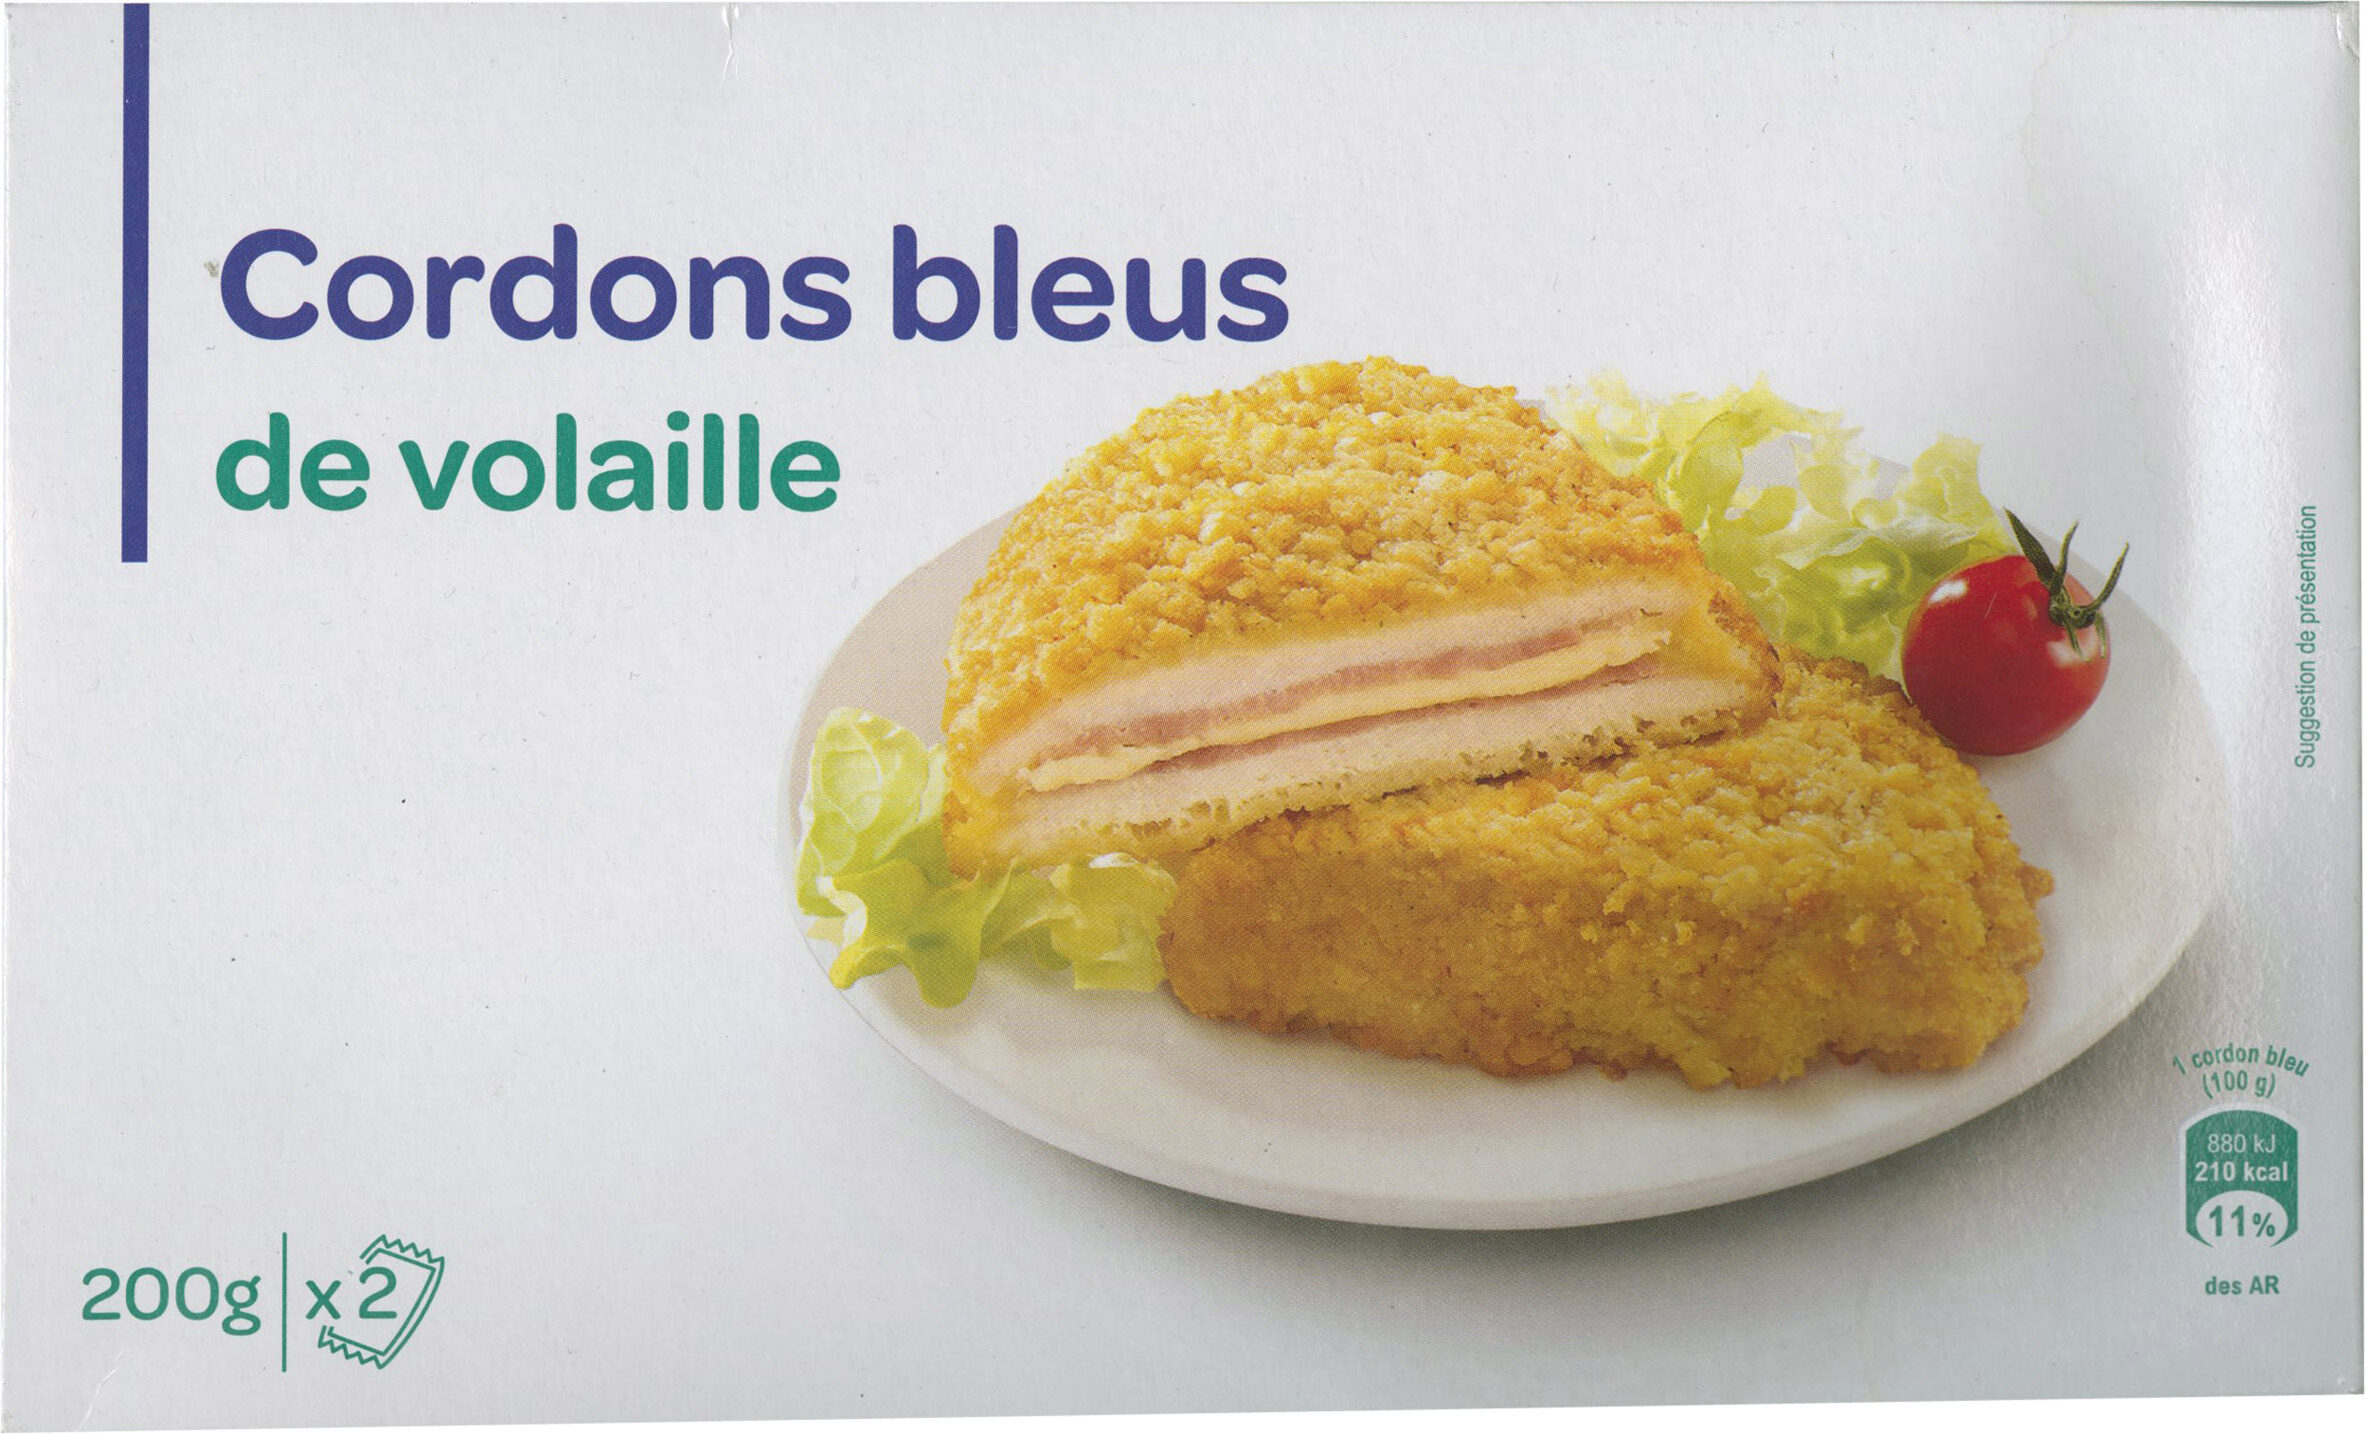 Cordons bleus de volaille - Prodotto - fr